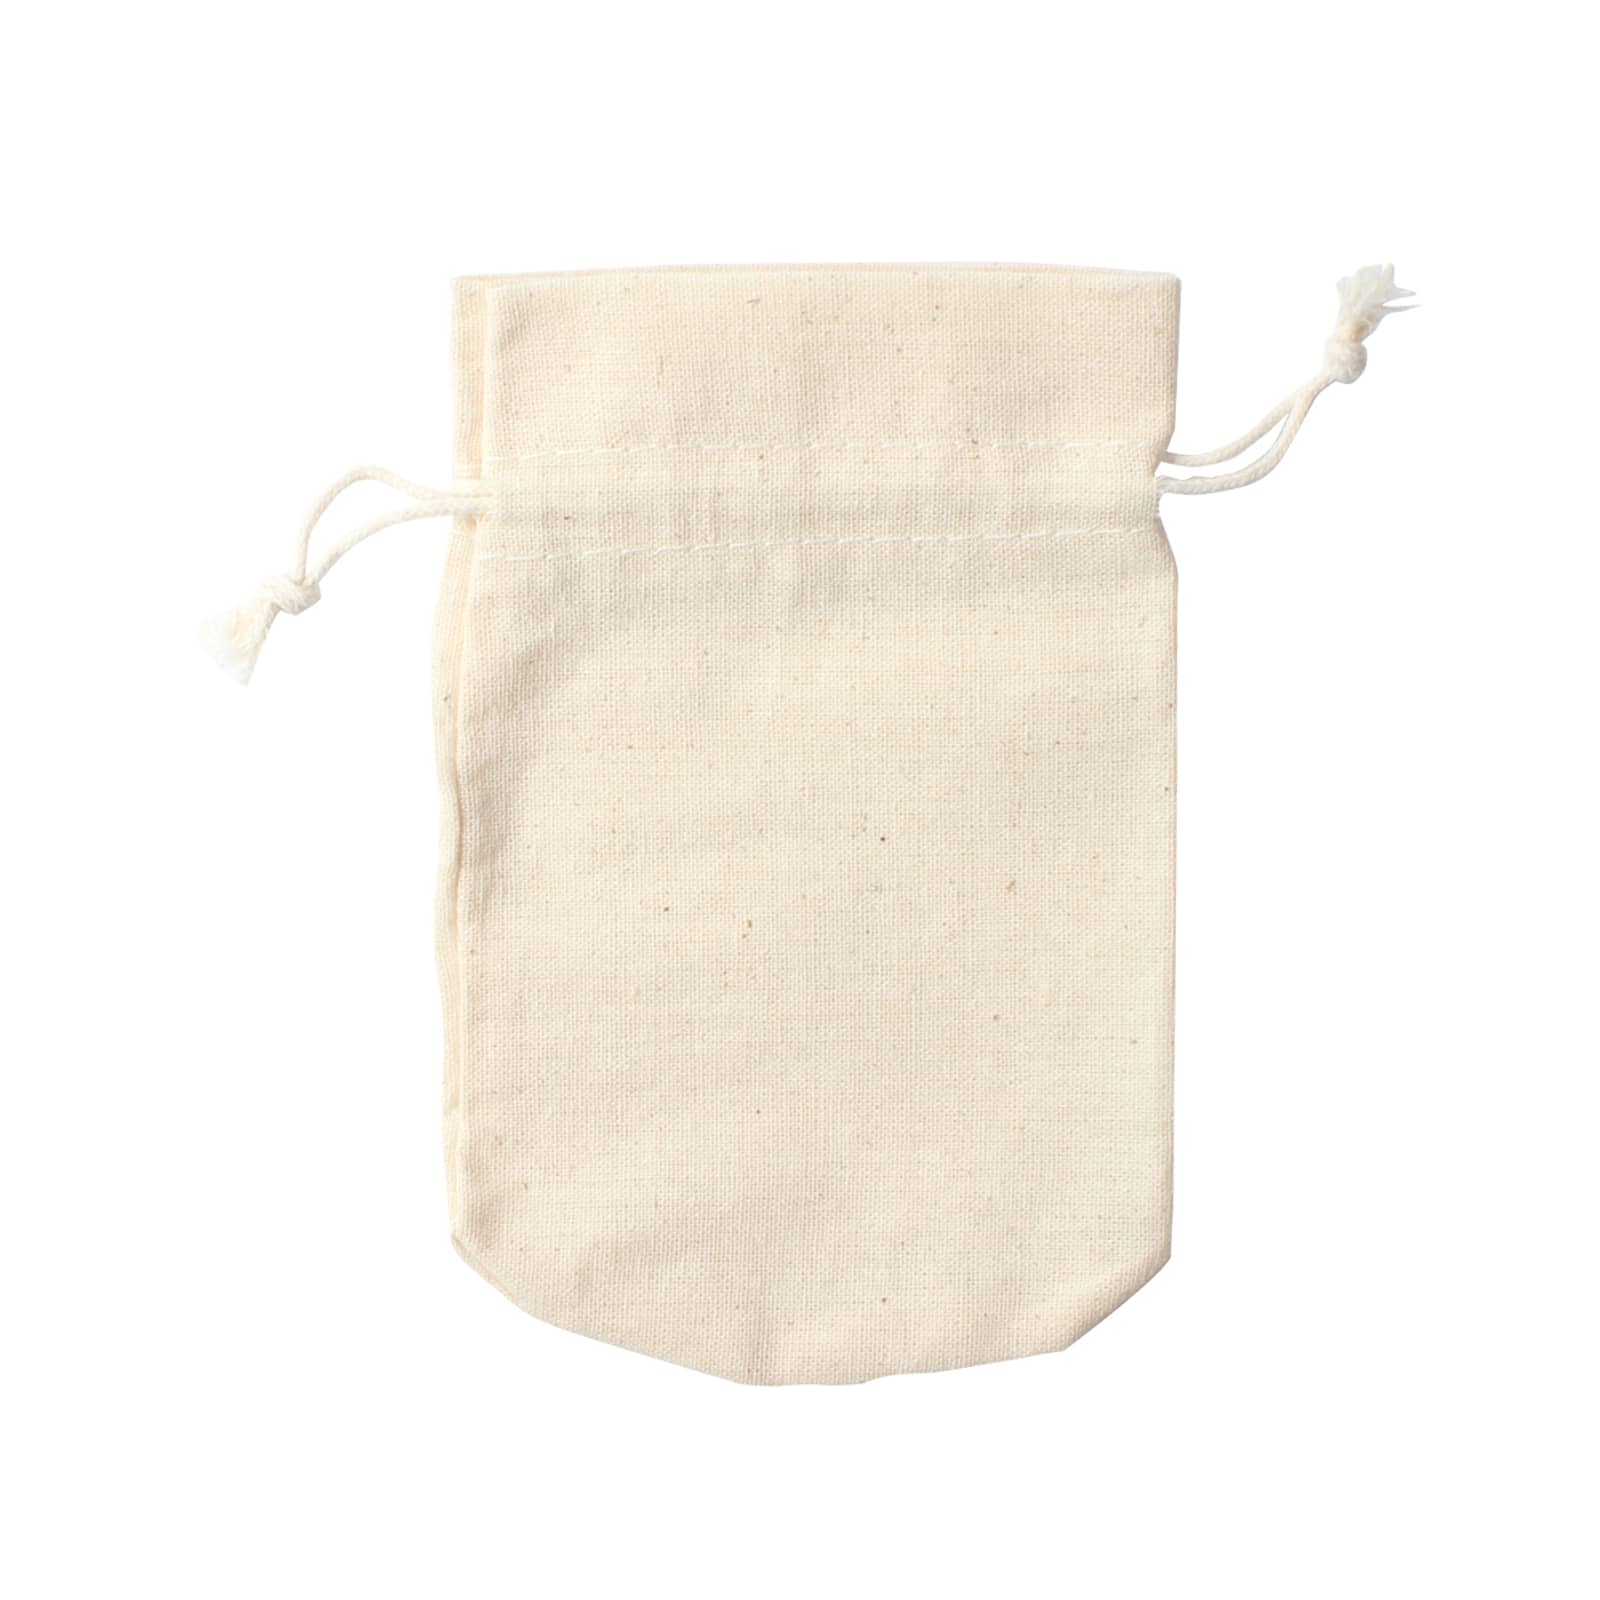 8 x 12 Muslin Bags with Cotton Drawstring (12 PK)